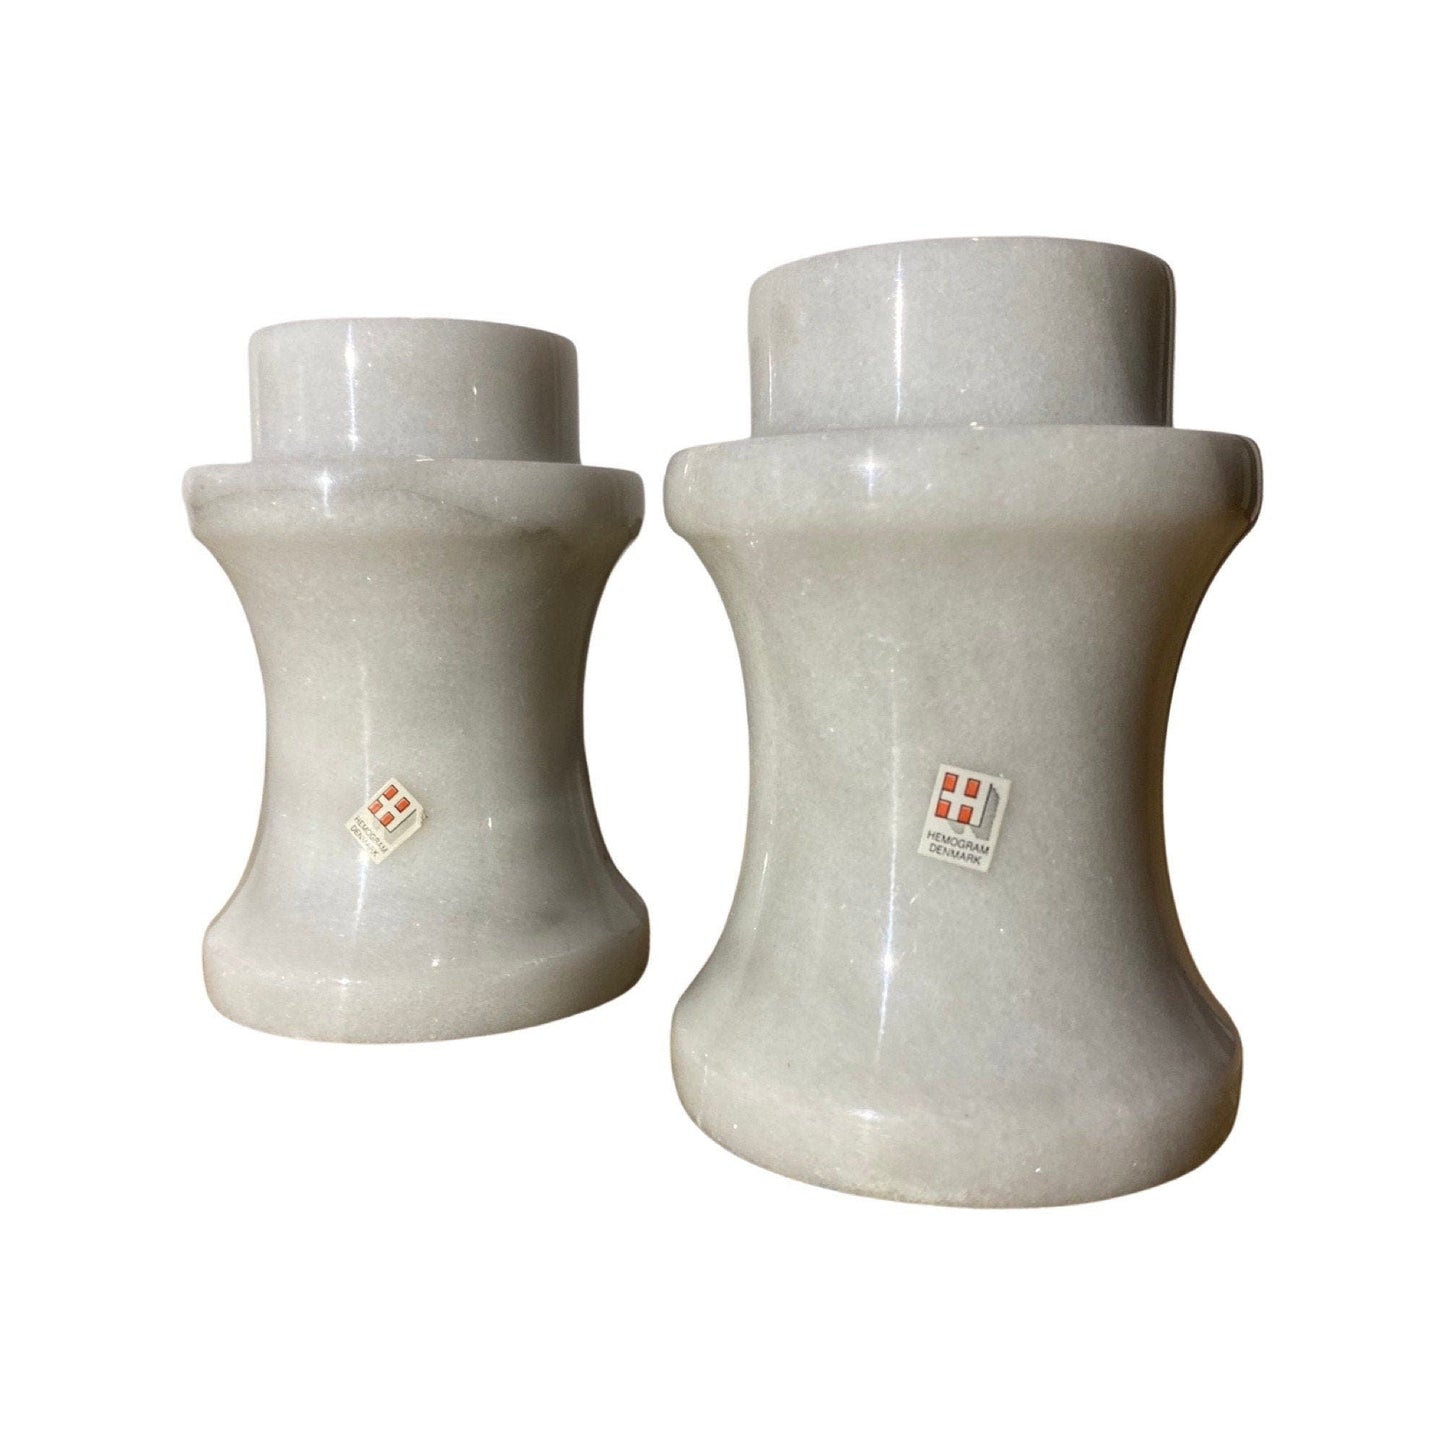 2 Vintage HEMOGRAM Denmark Marble Candlestick Holders | Set of 2 Candle Stick Holders | Candlesticks and Big Candles SMOOTH Marble Pattern - FancyVintage.nl -